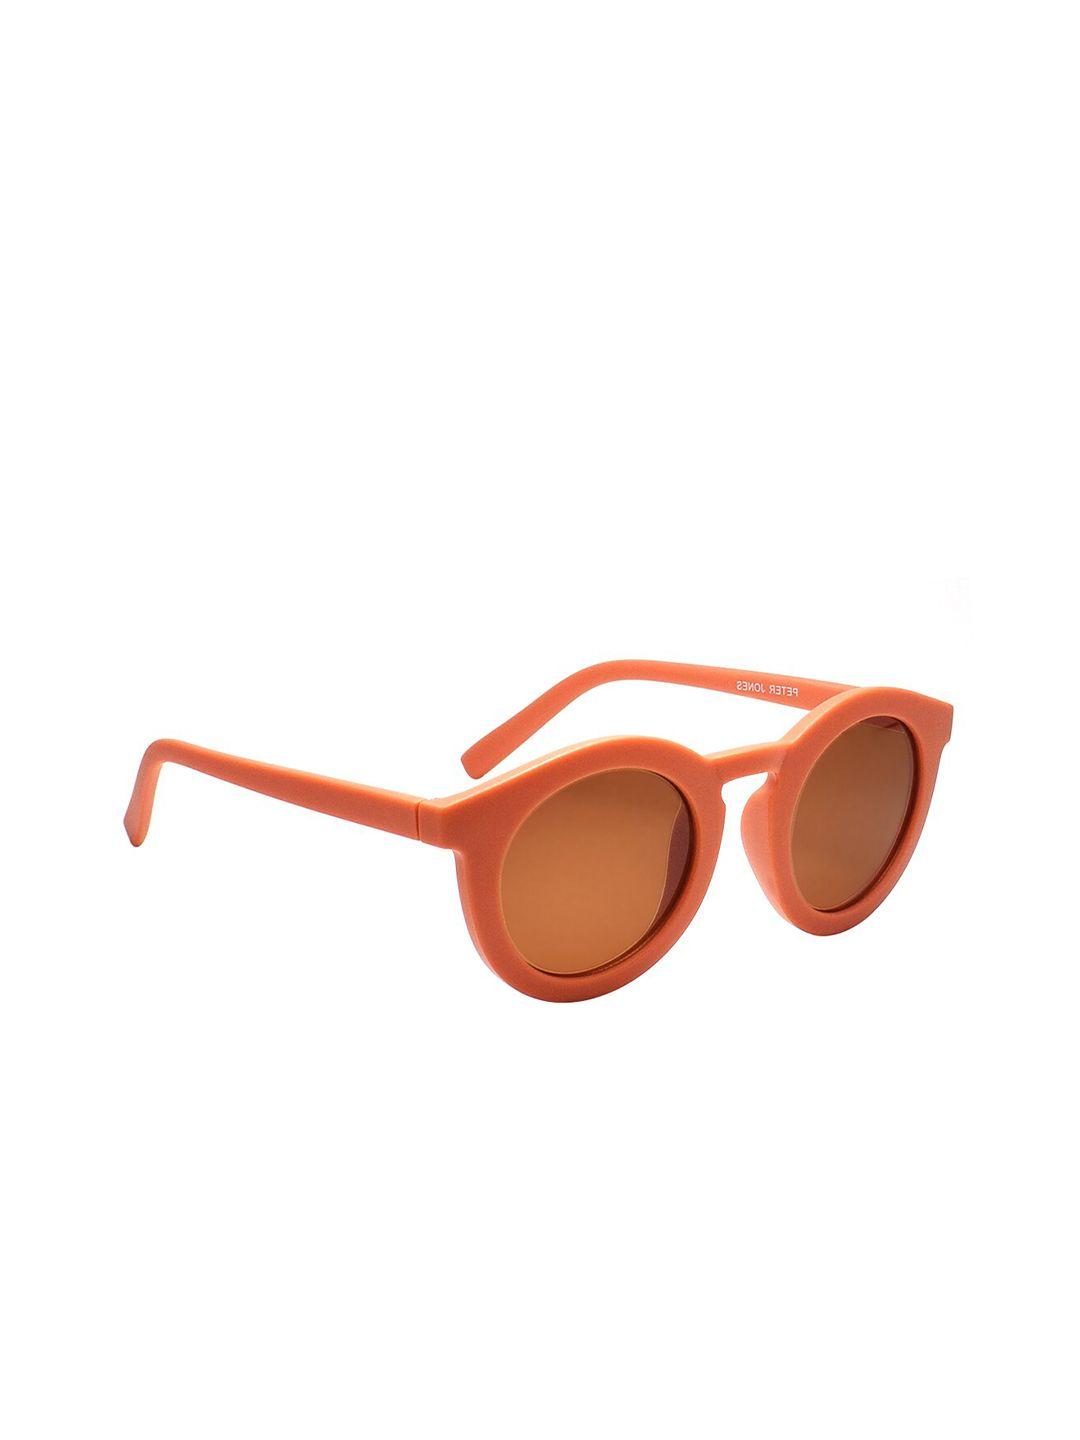 peter jones eyewear unisex brown lens & orange round sunglasses with uv protected lens